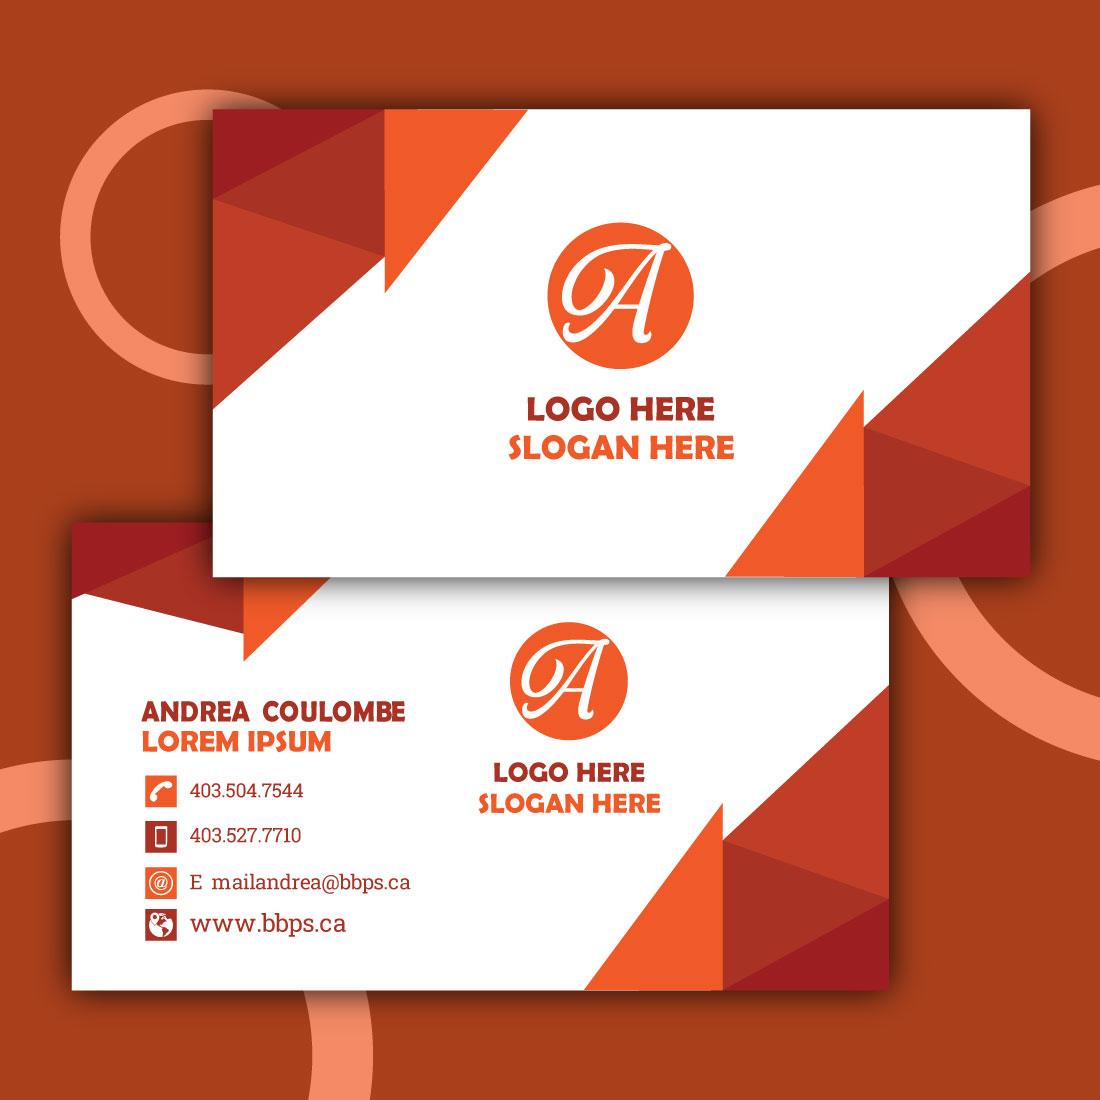 Stylish Minimal Business Card Orange Template cover image.